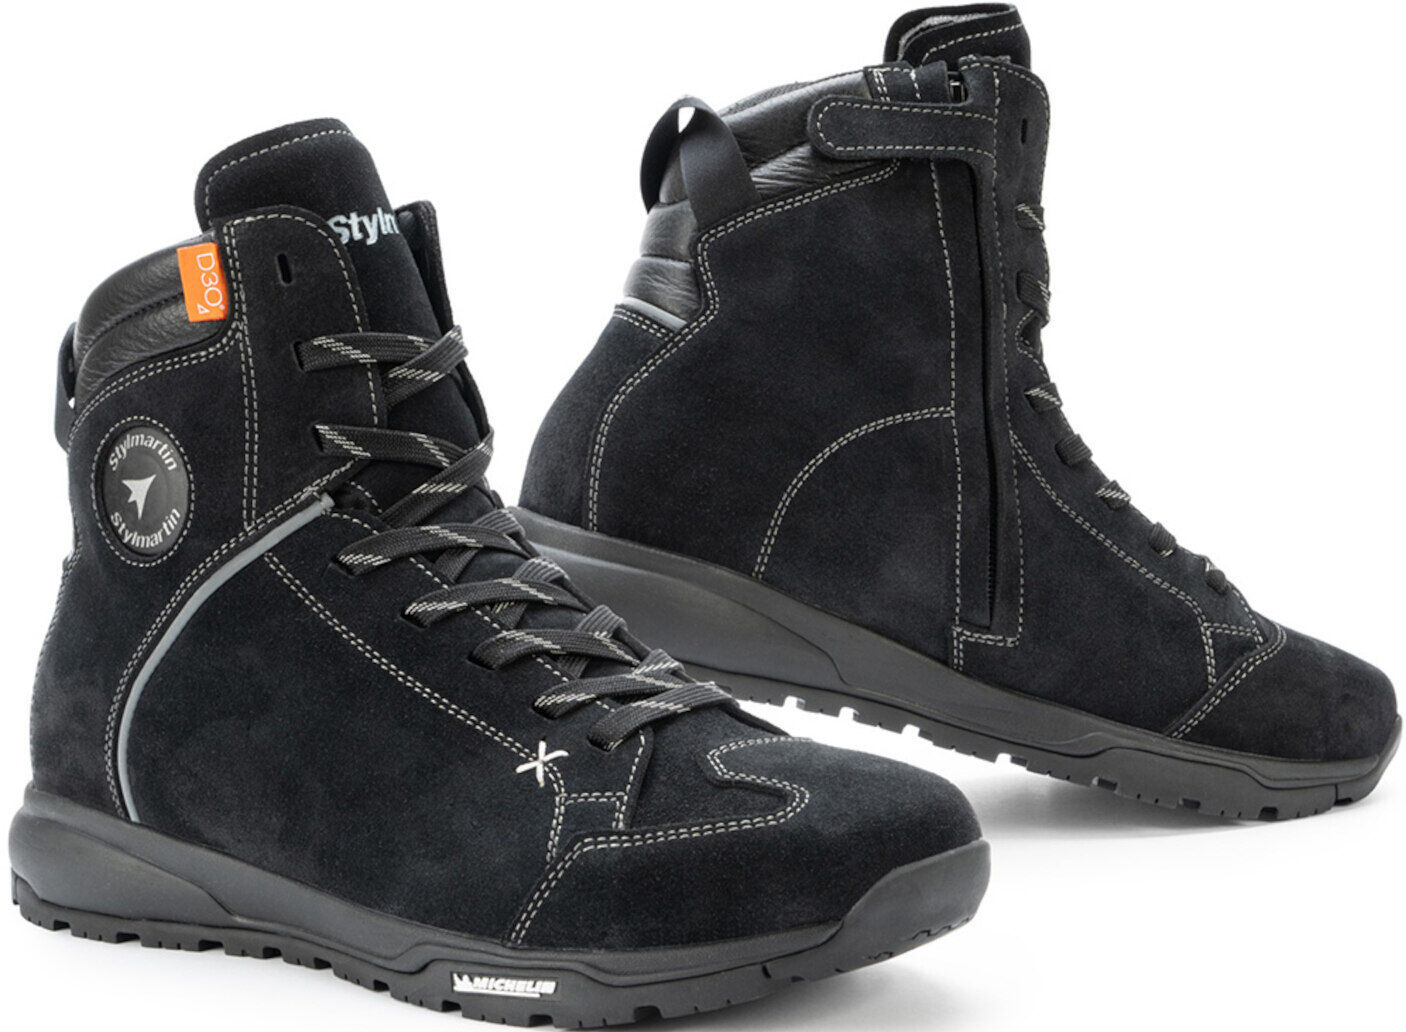 Stylmartin Zed Zapatos de moto impermeables - Negro (47)